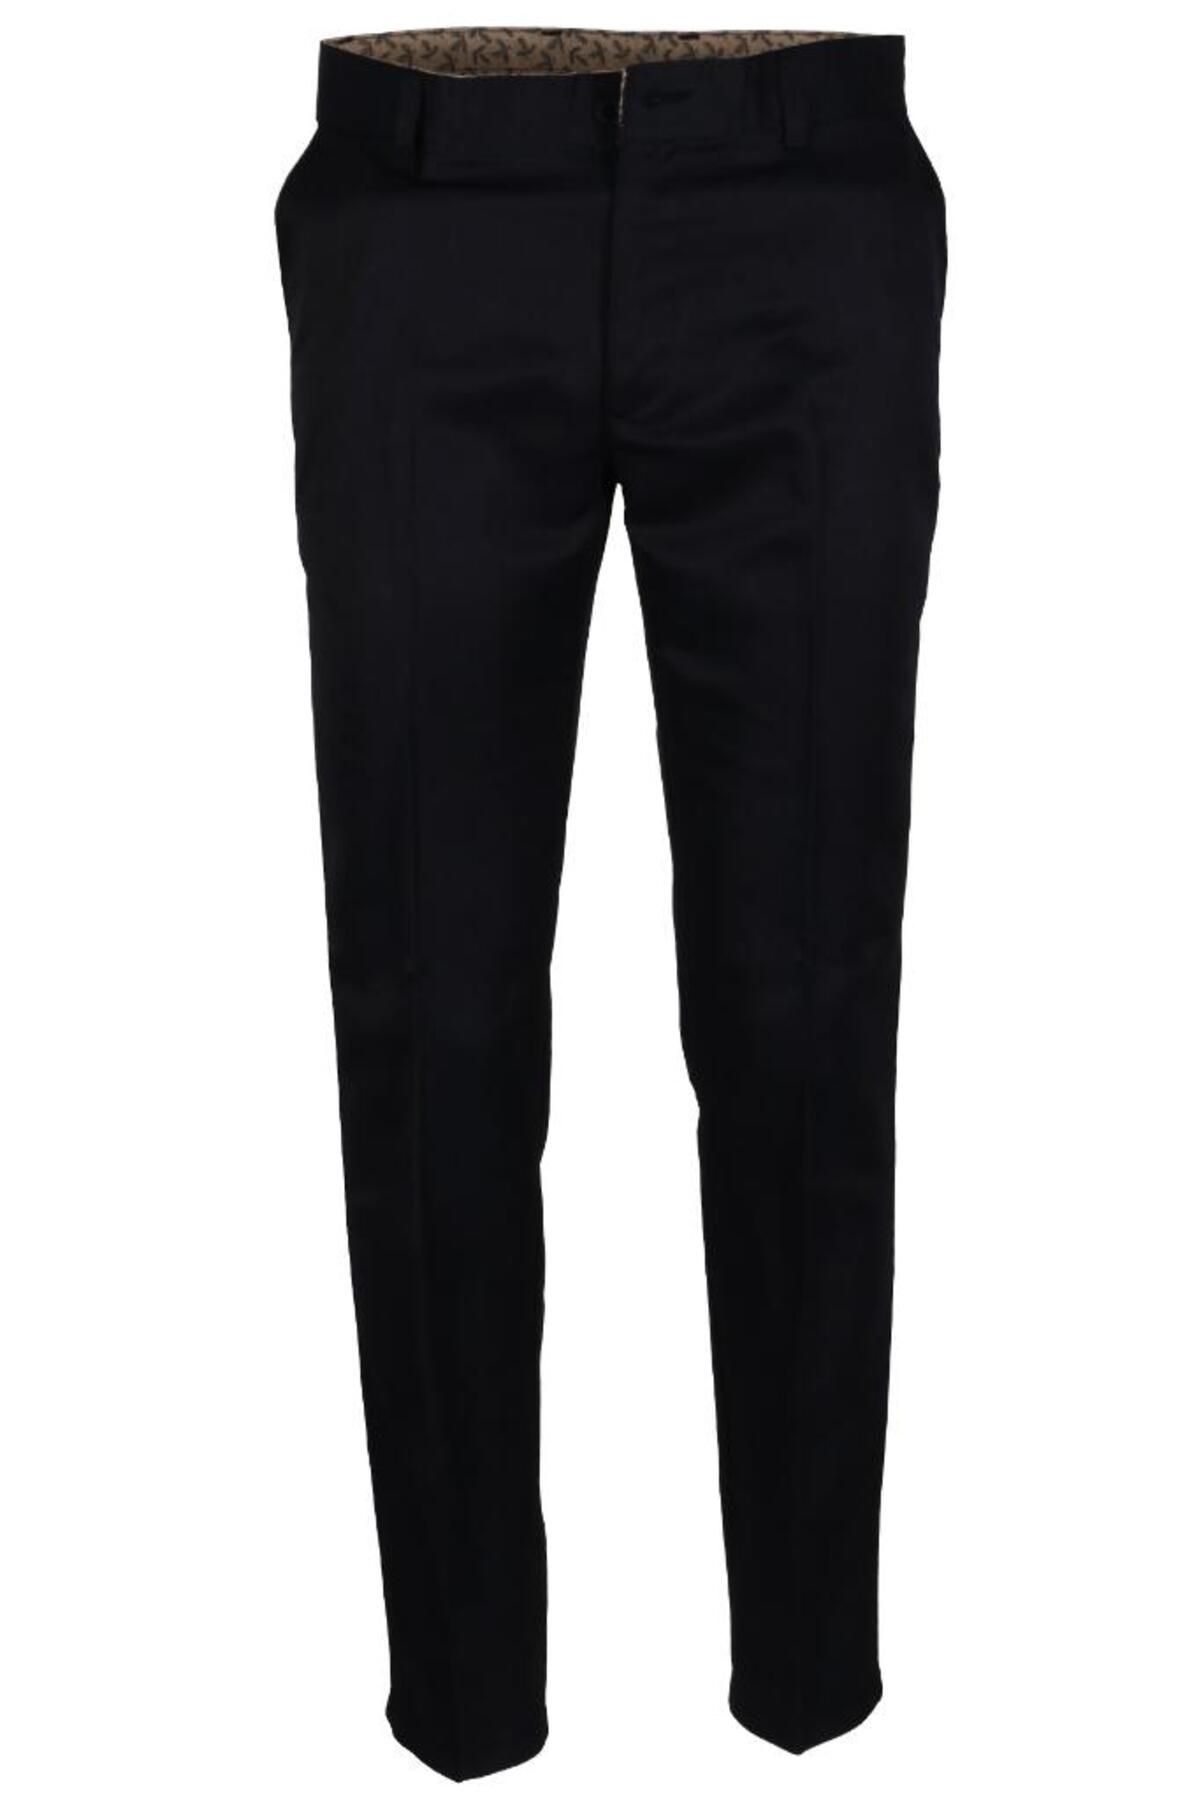 Modarar Erkek Keten Pantolon Klasik Normal Kesim RAR01161